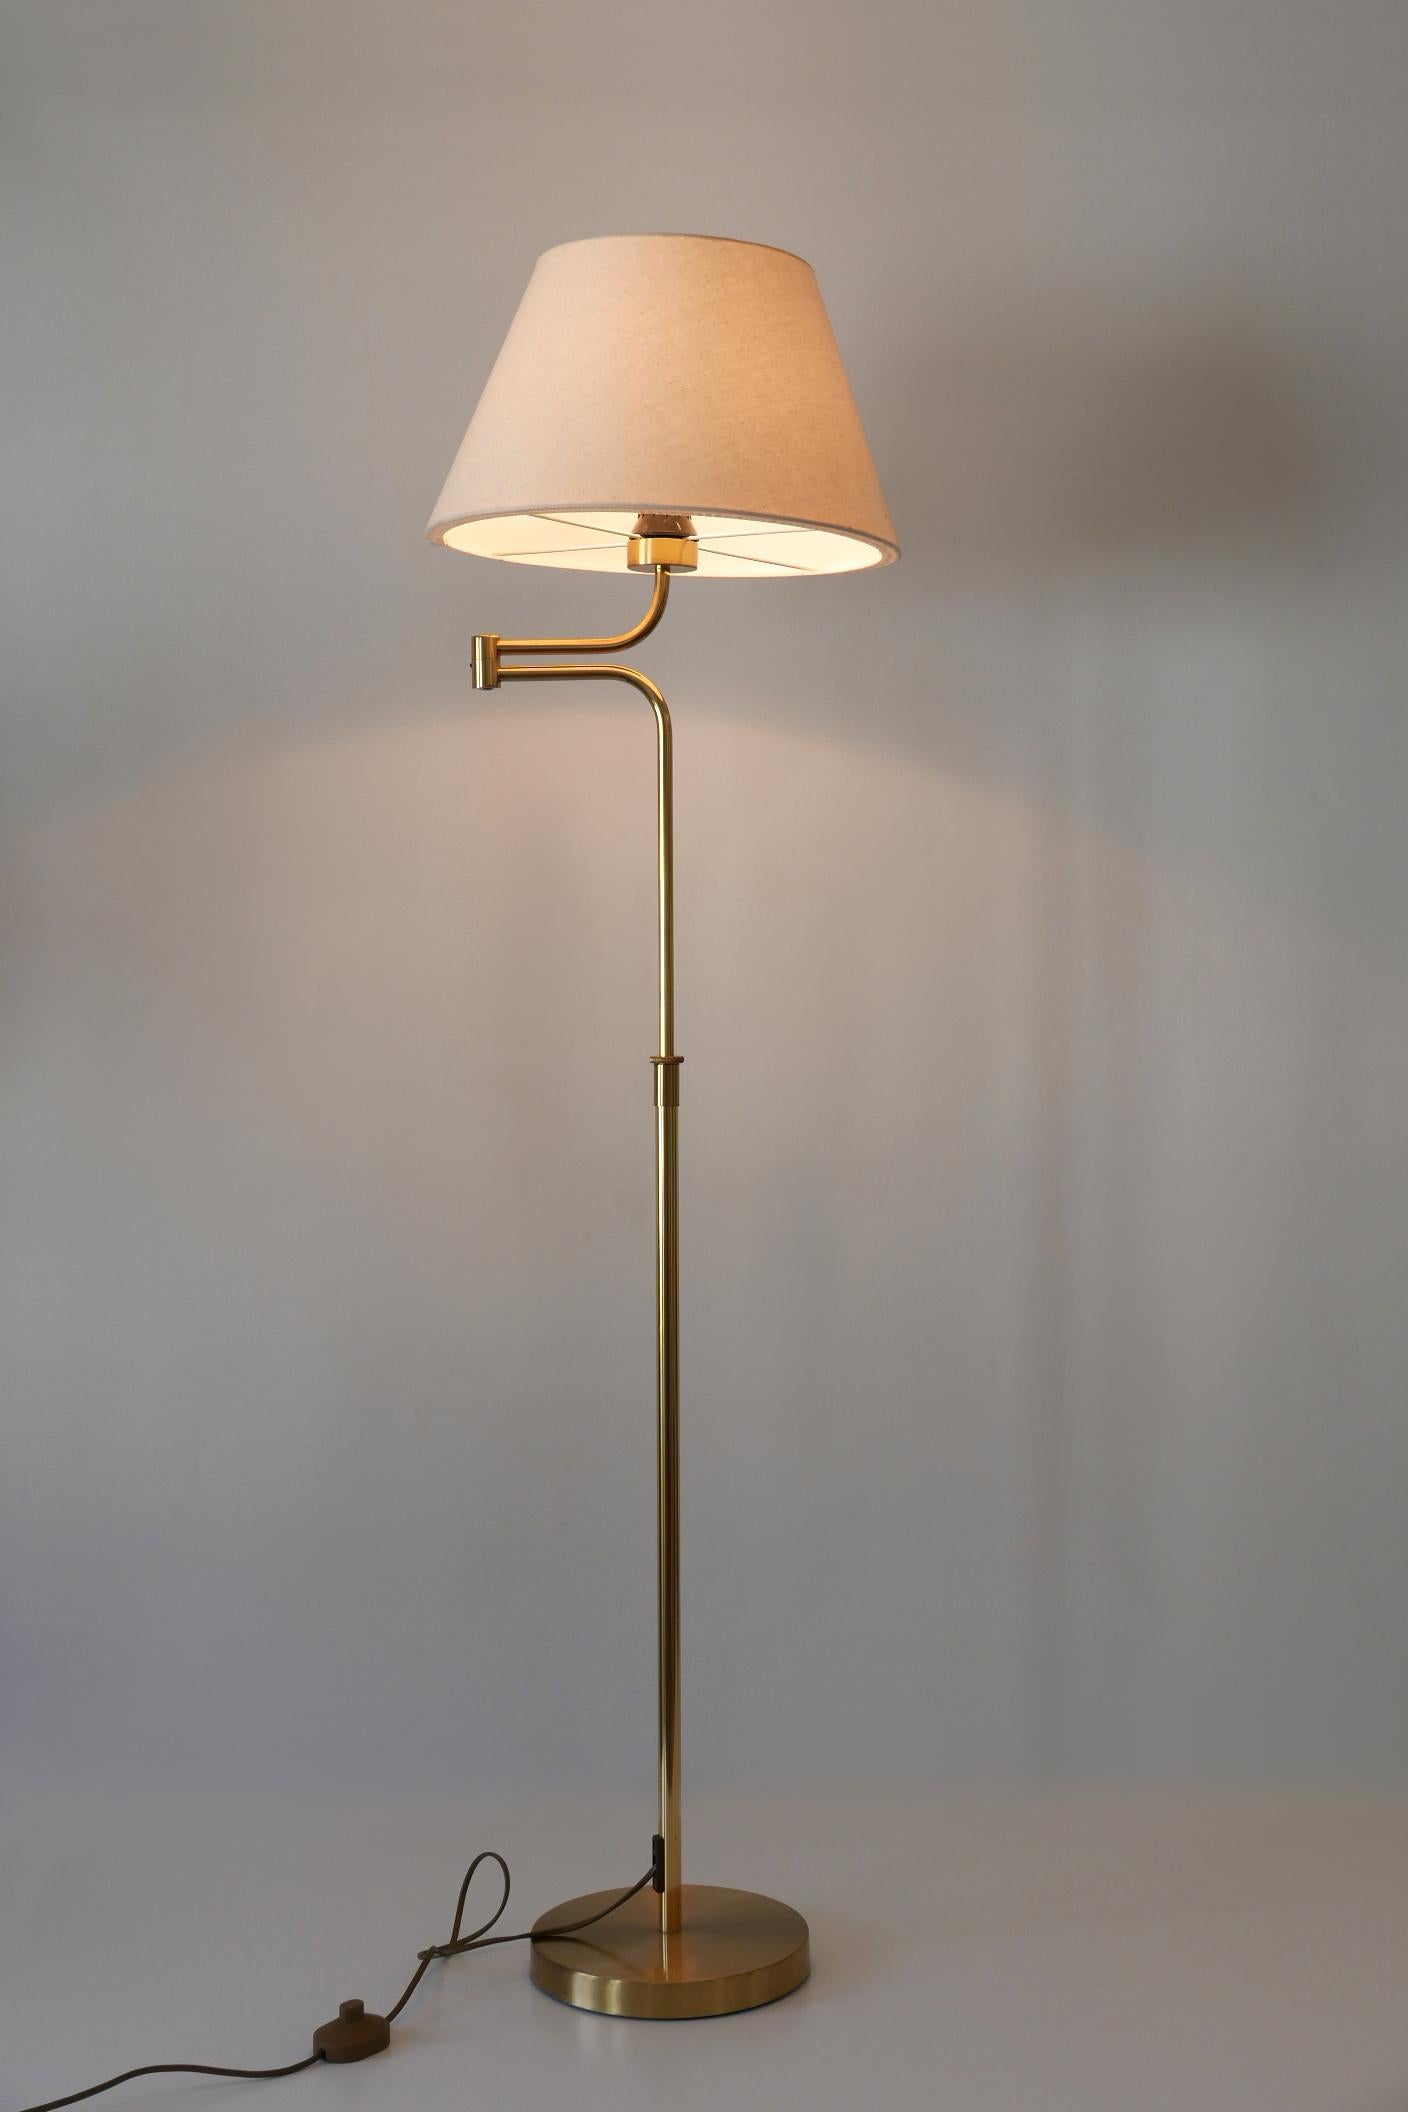 Late 20th Century Adjustable Vintage Floor Lamp or Reading Light by Sölken Leuchten Germany 1980s For Sale